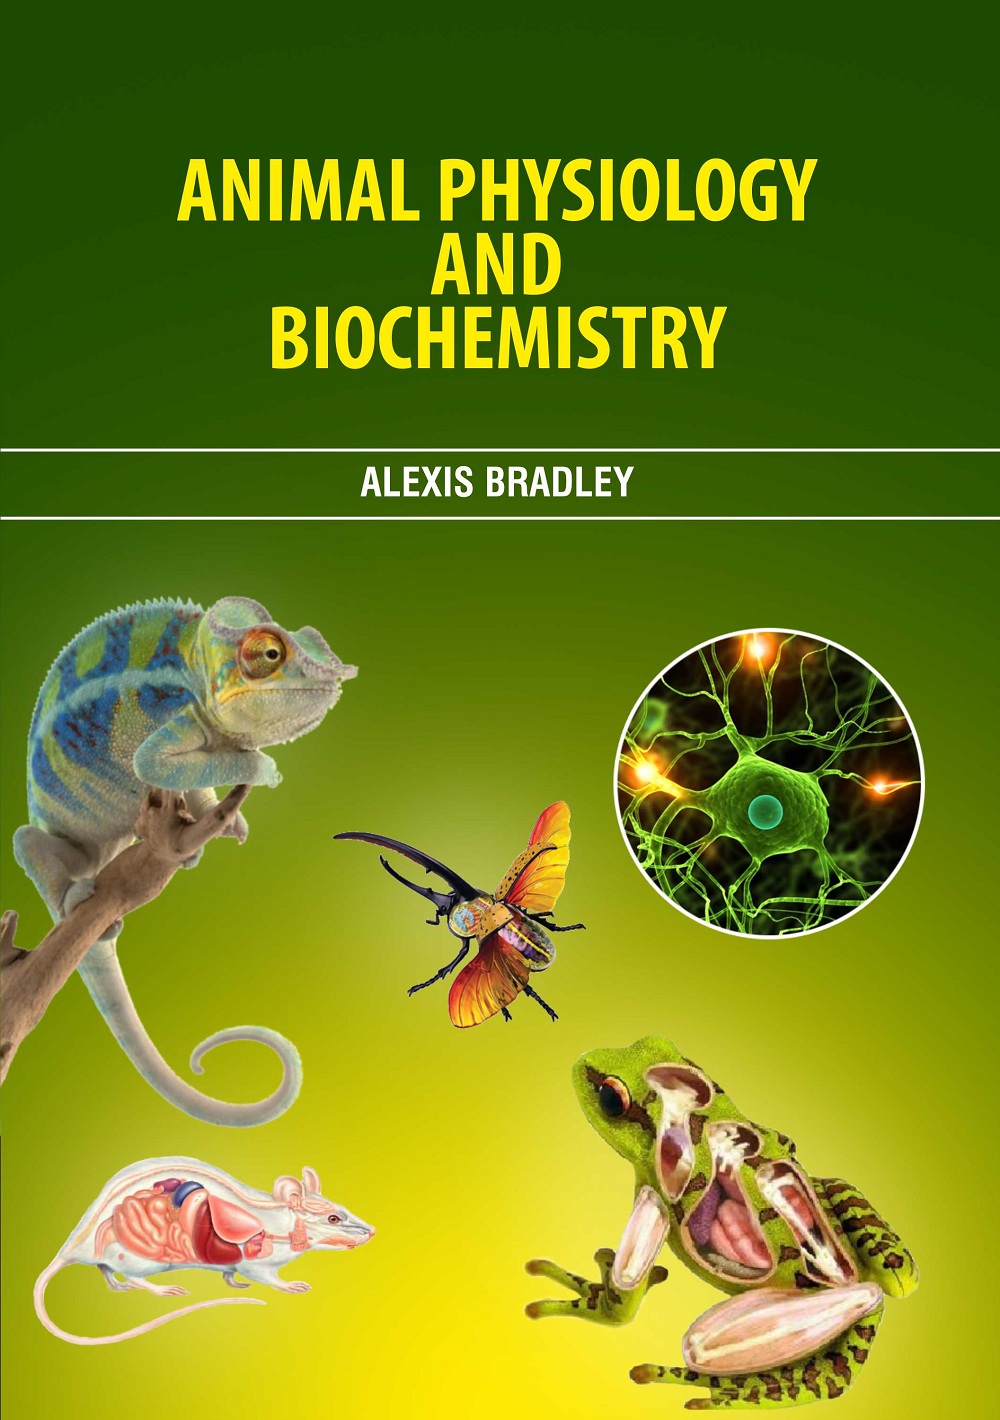 catalog/books/Animal Physiology and Biochemistry.jpg